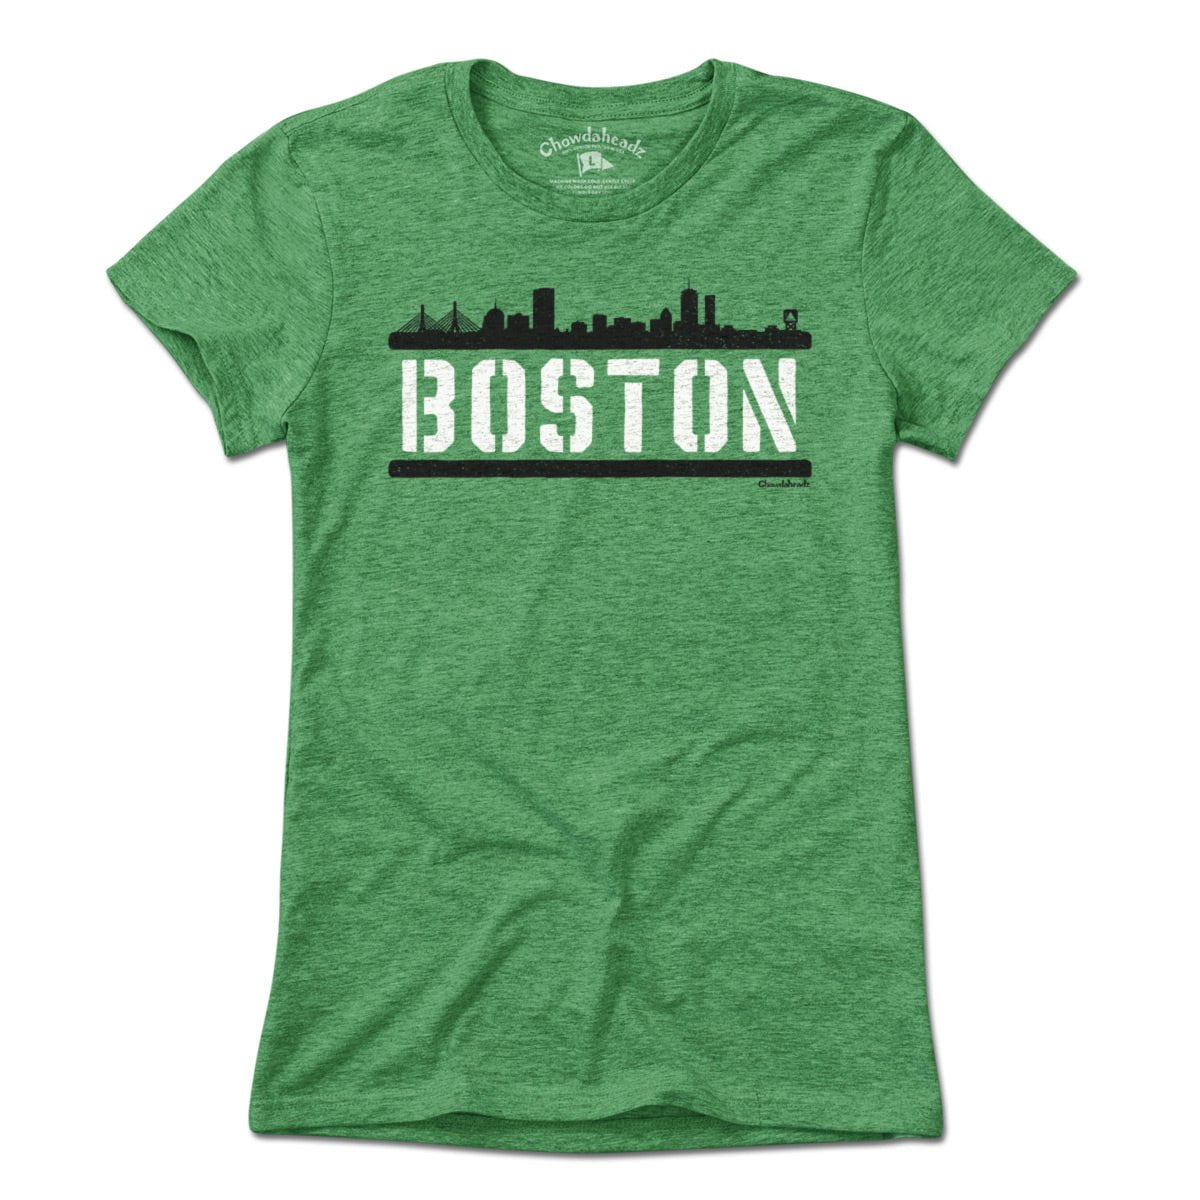 Boston City Line T-Shirt - Chowdaheadz